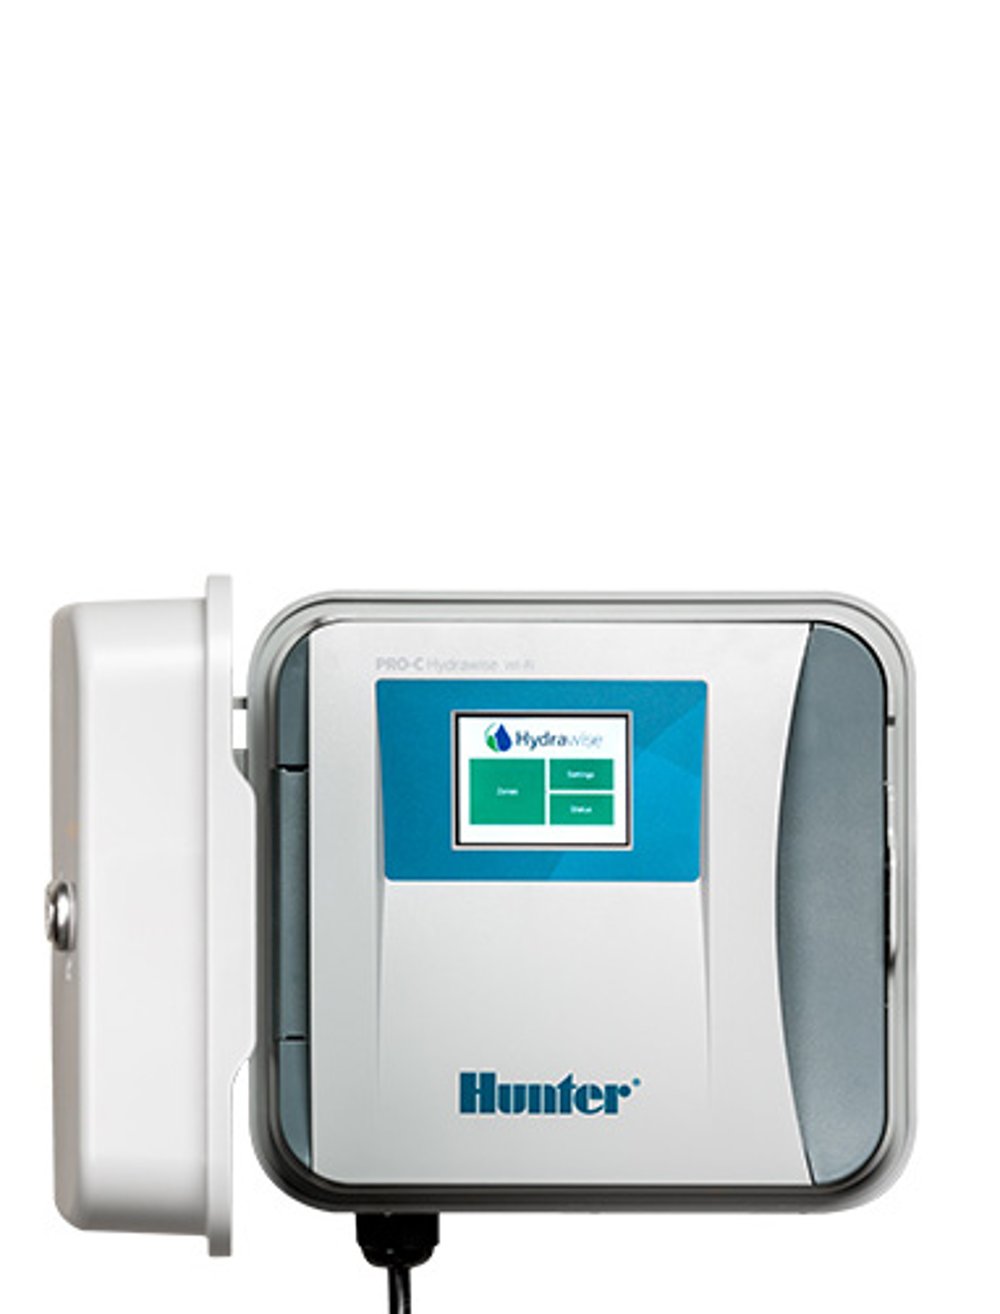 Barnes Irrigation
Hunter HPC Hydrawise controller